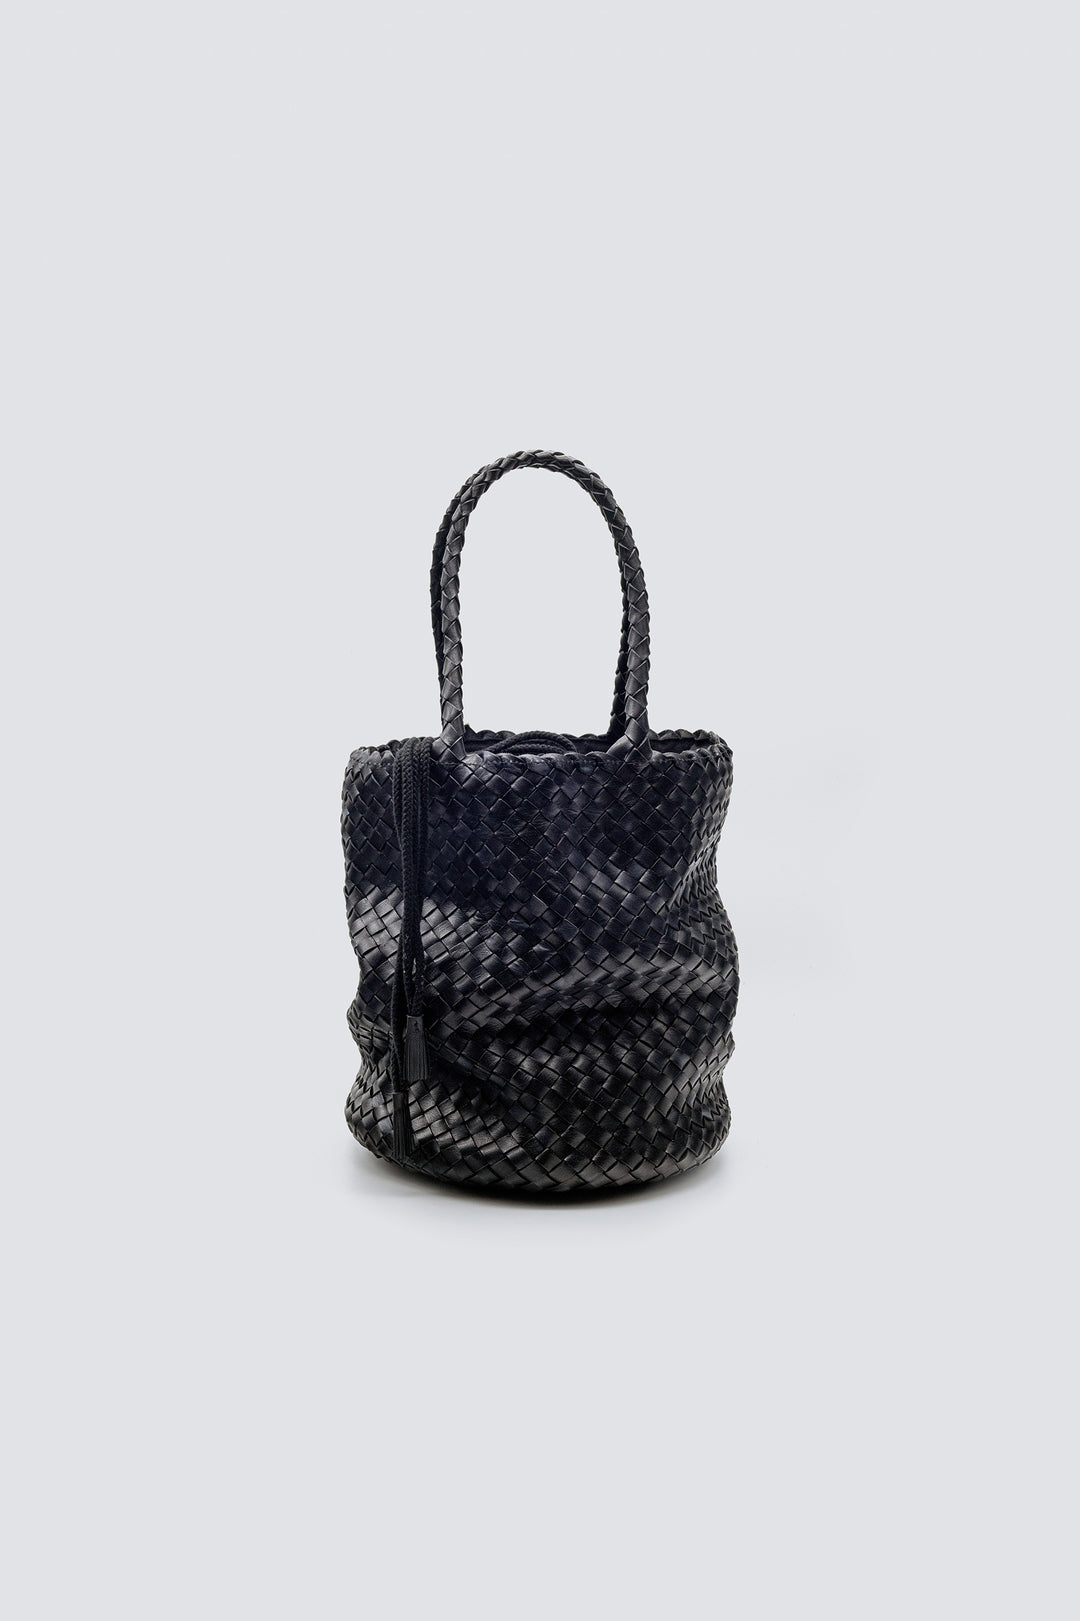 Dragon Diffusion woven leather bag handmade - Jackie Bucket Lining Black